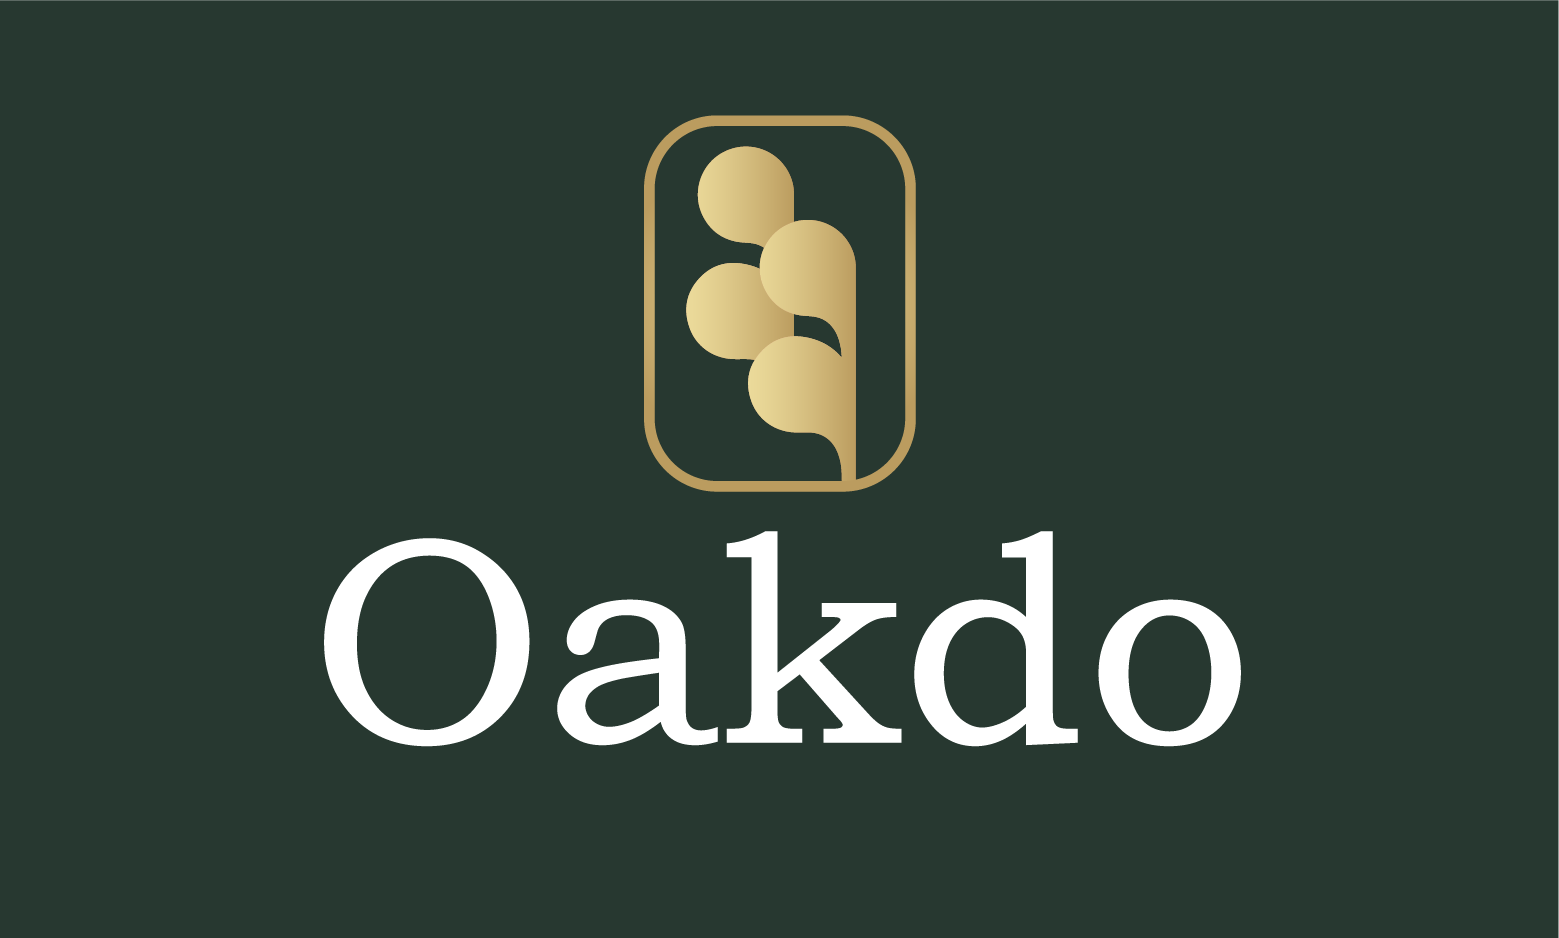 Oakdo.com - Creative brandable domain for sale